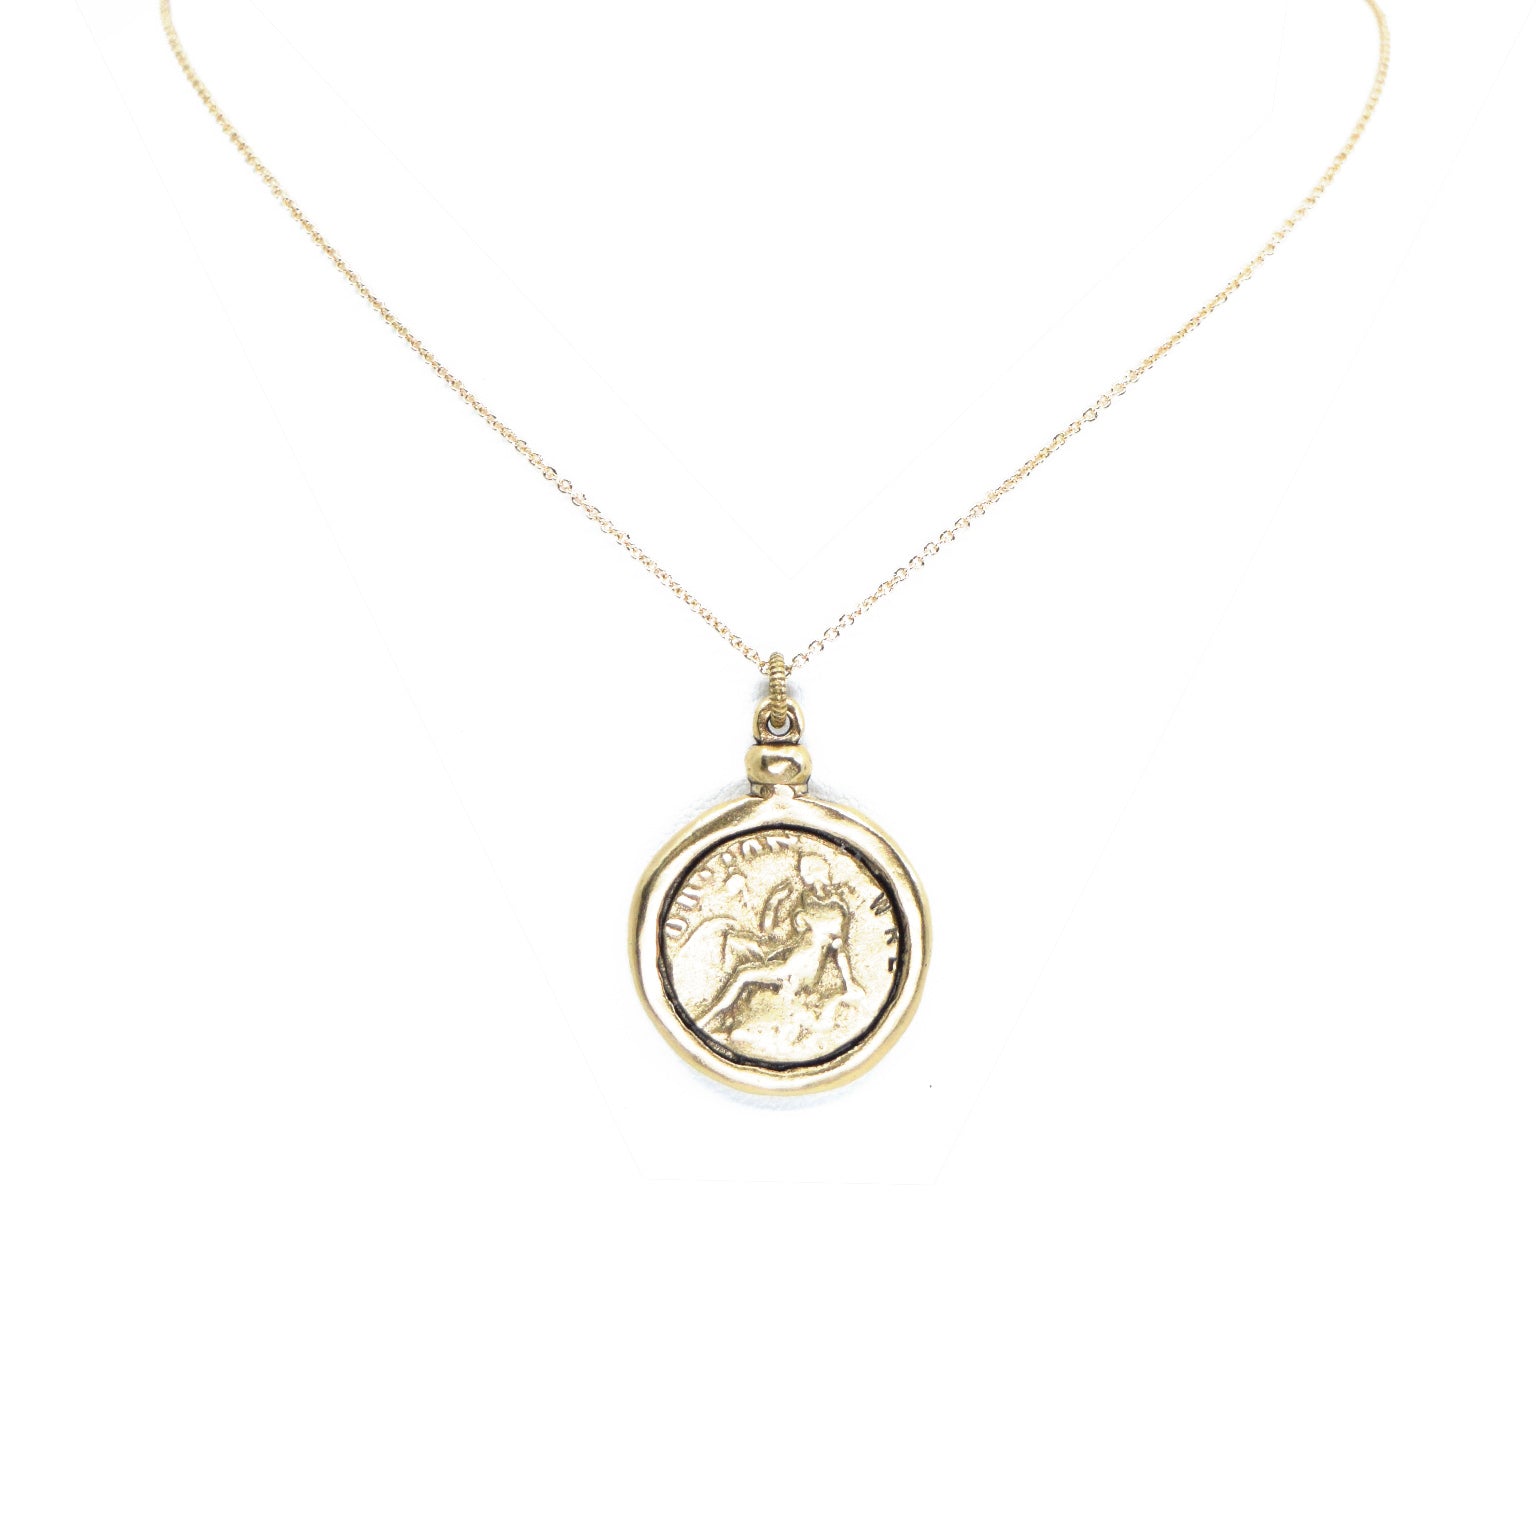 Buy Goddess Necklace Online